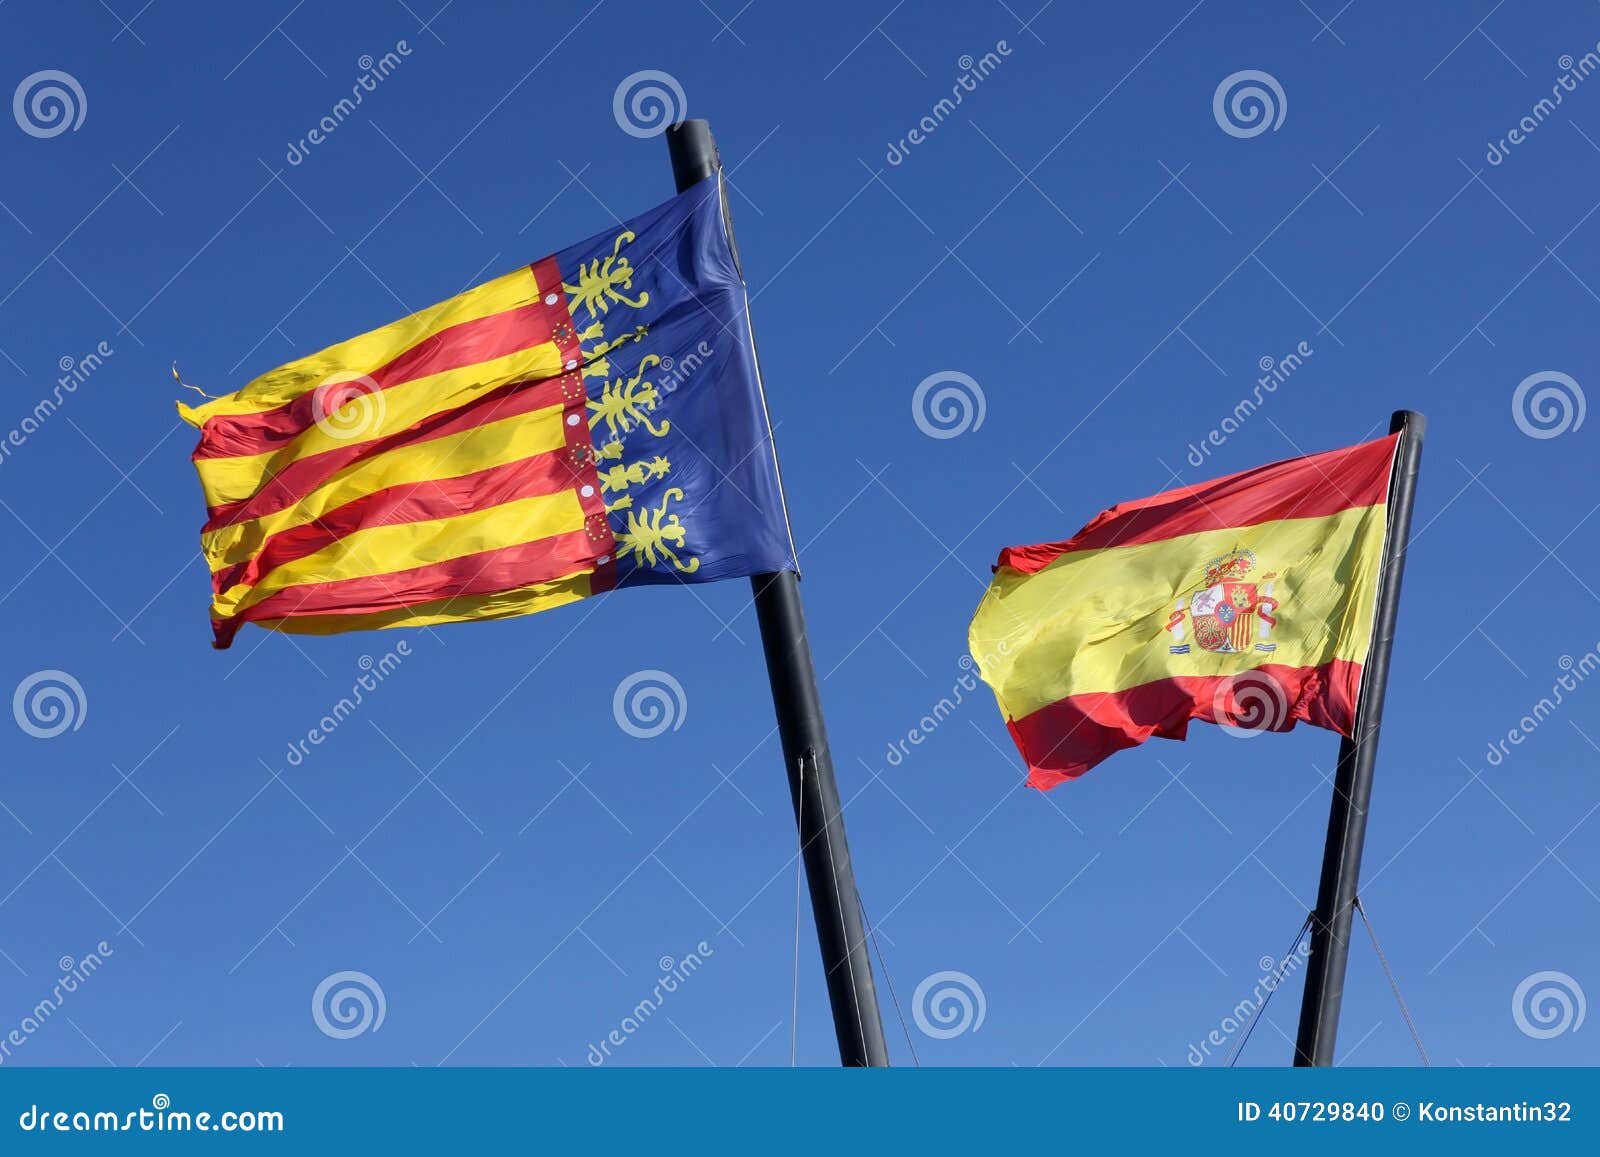 flag spain and comunidad valenciana,